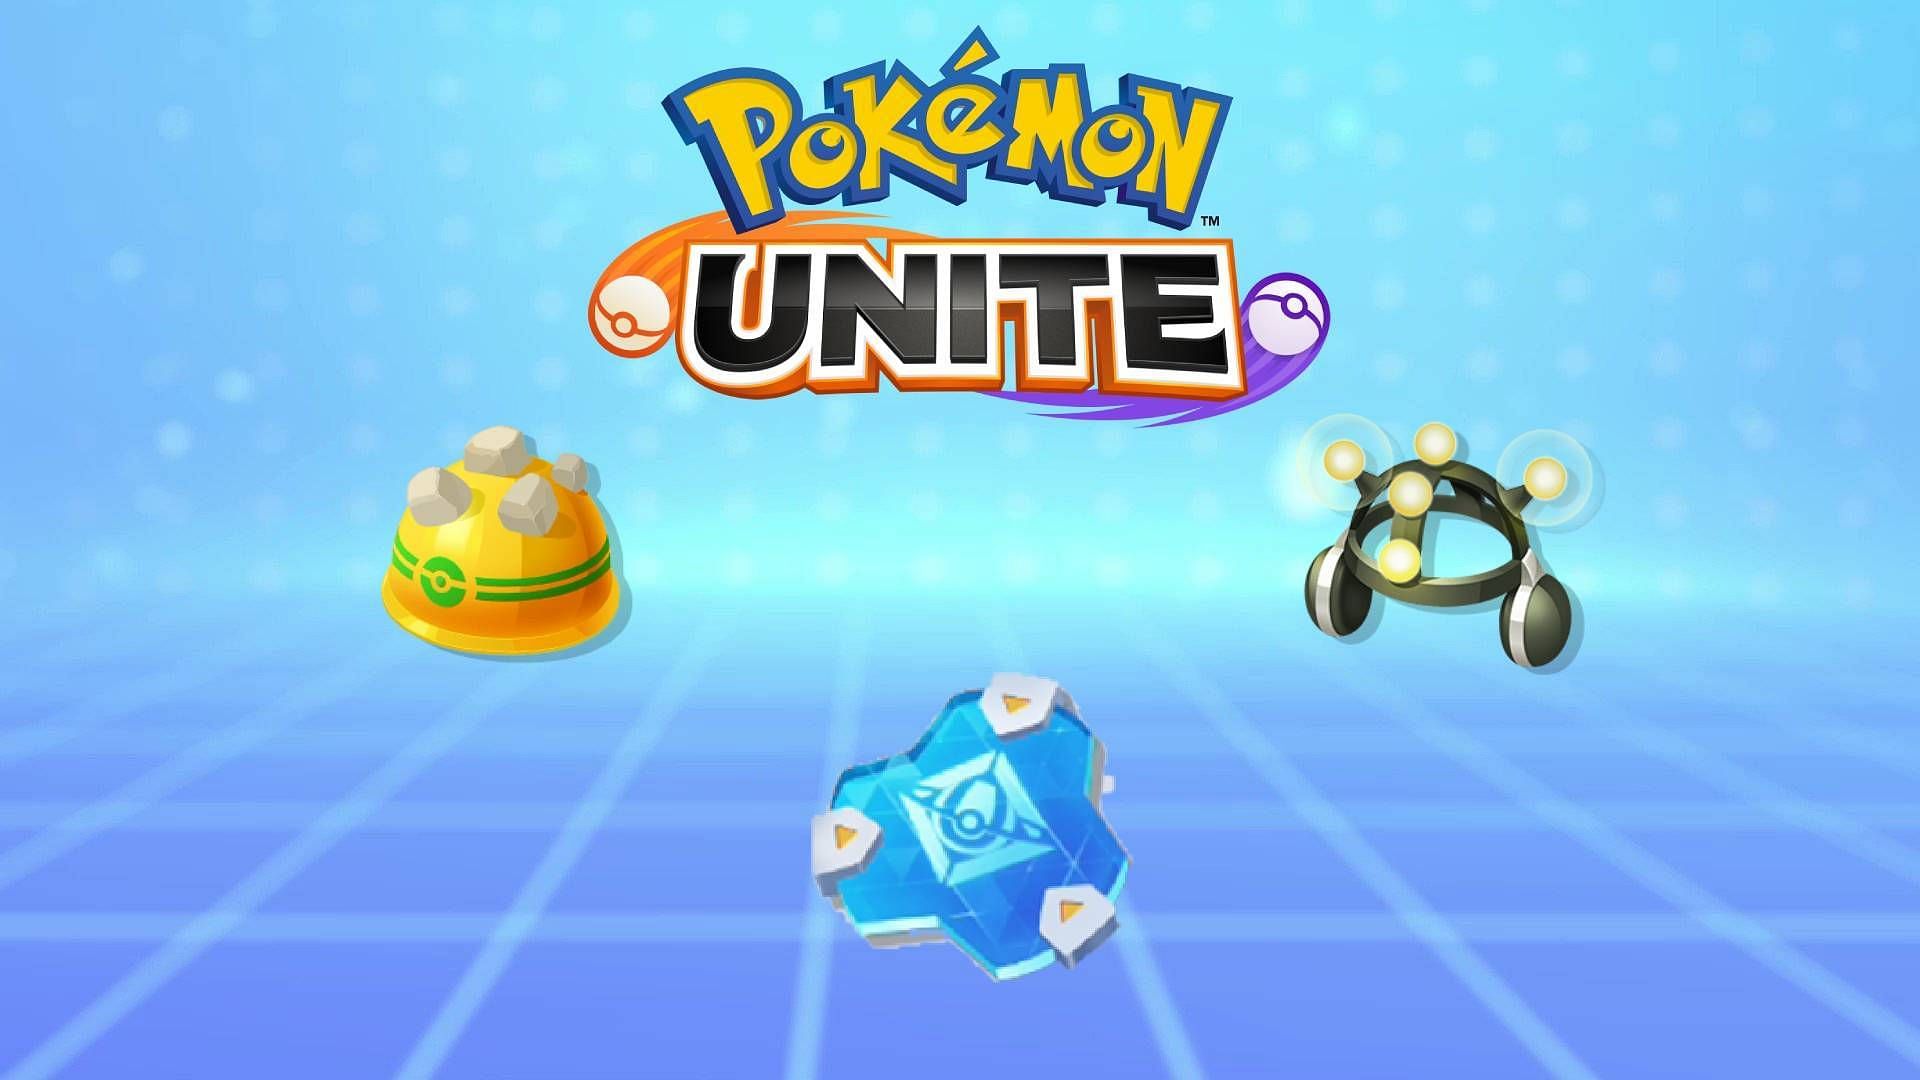 Official artwork for held items in Pokemon Unite (Image via The Pokemon Company)